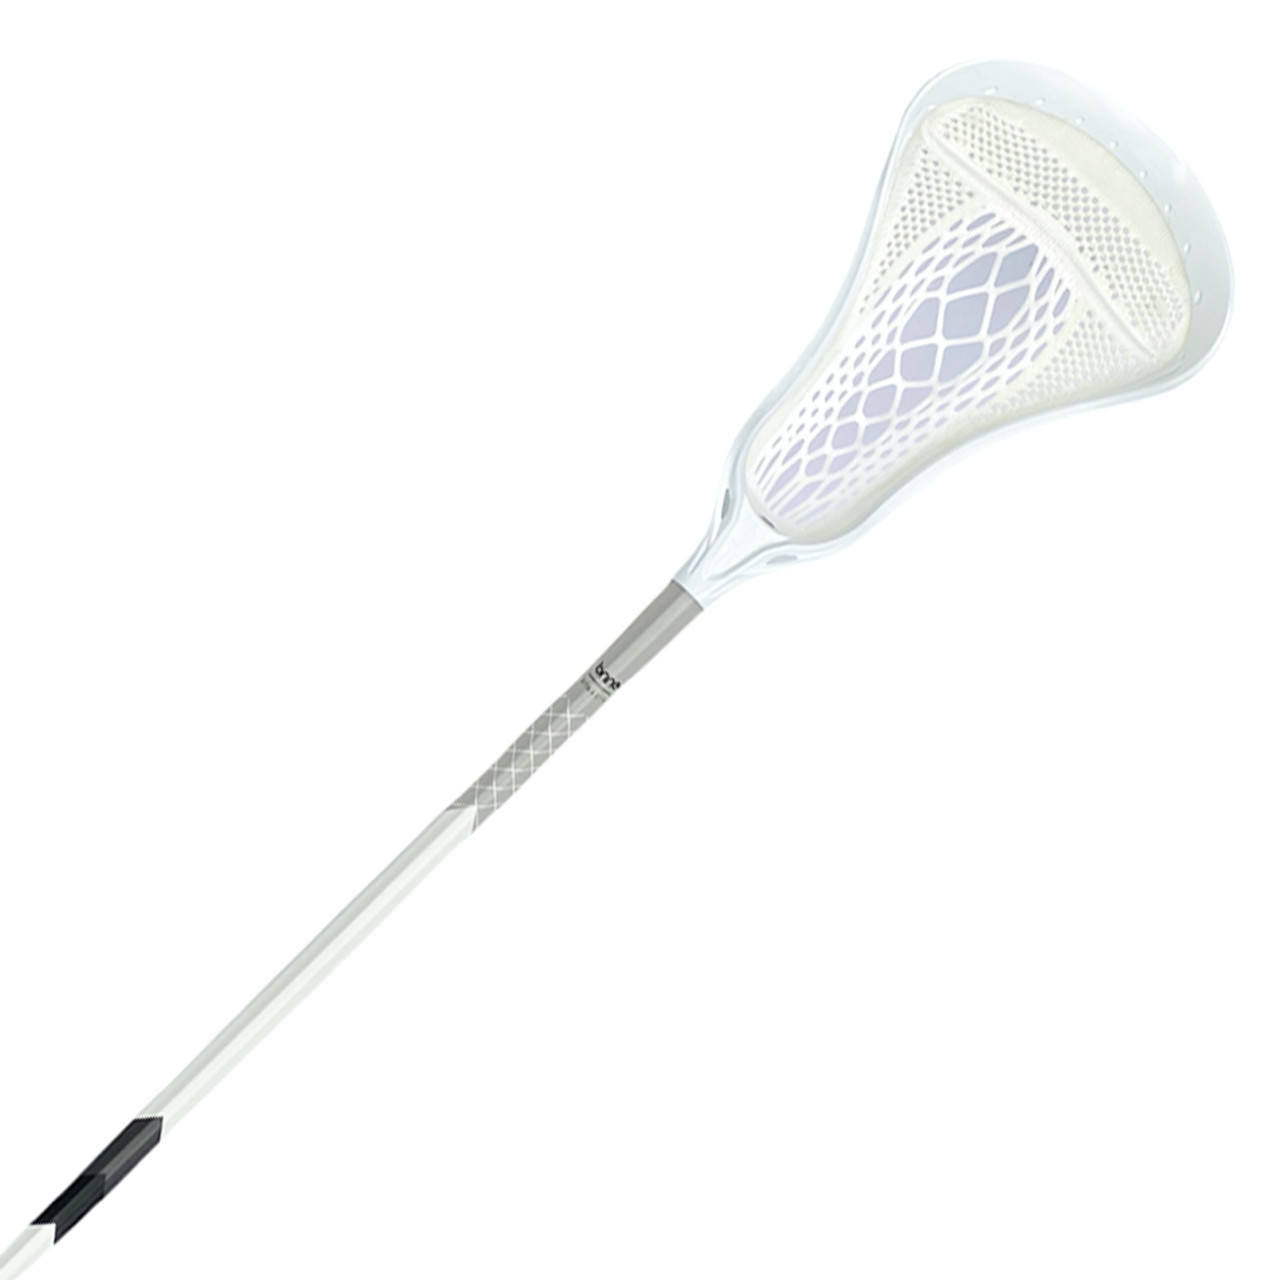 Used Lacrosse Stick Bundle